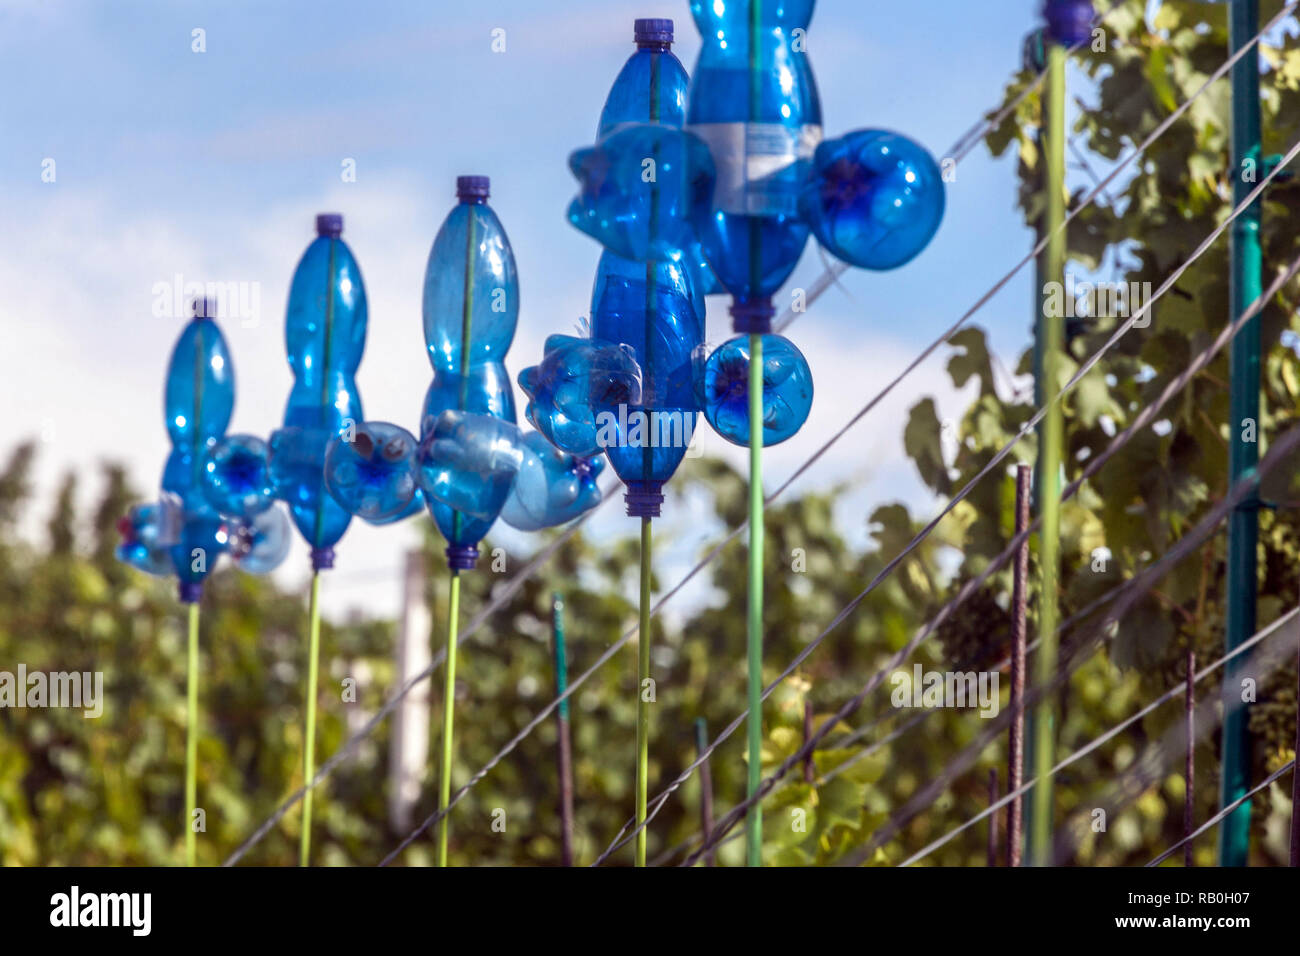 Bird Scarer of used plastic bottles in vineyard row Stock Photo